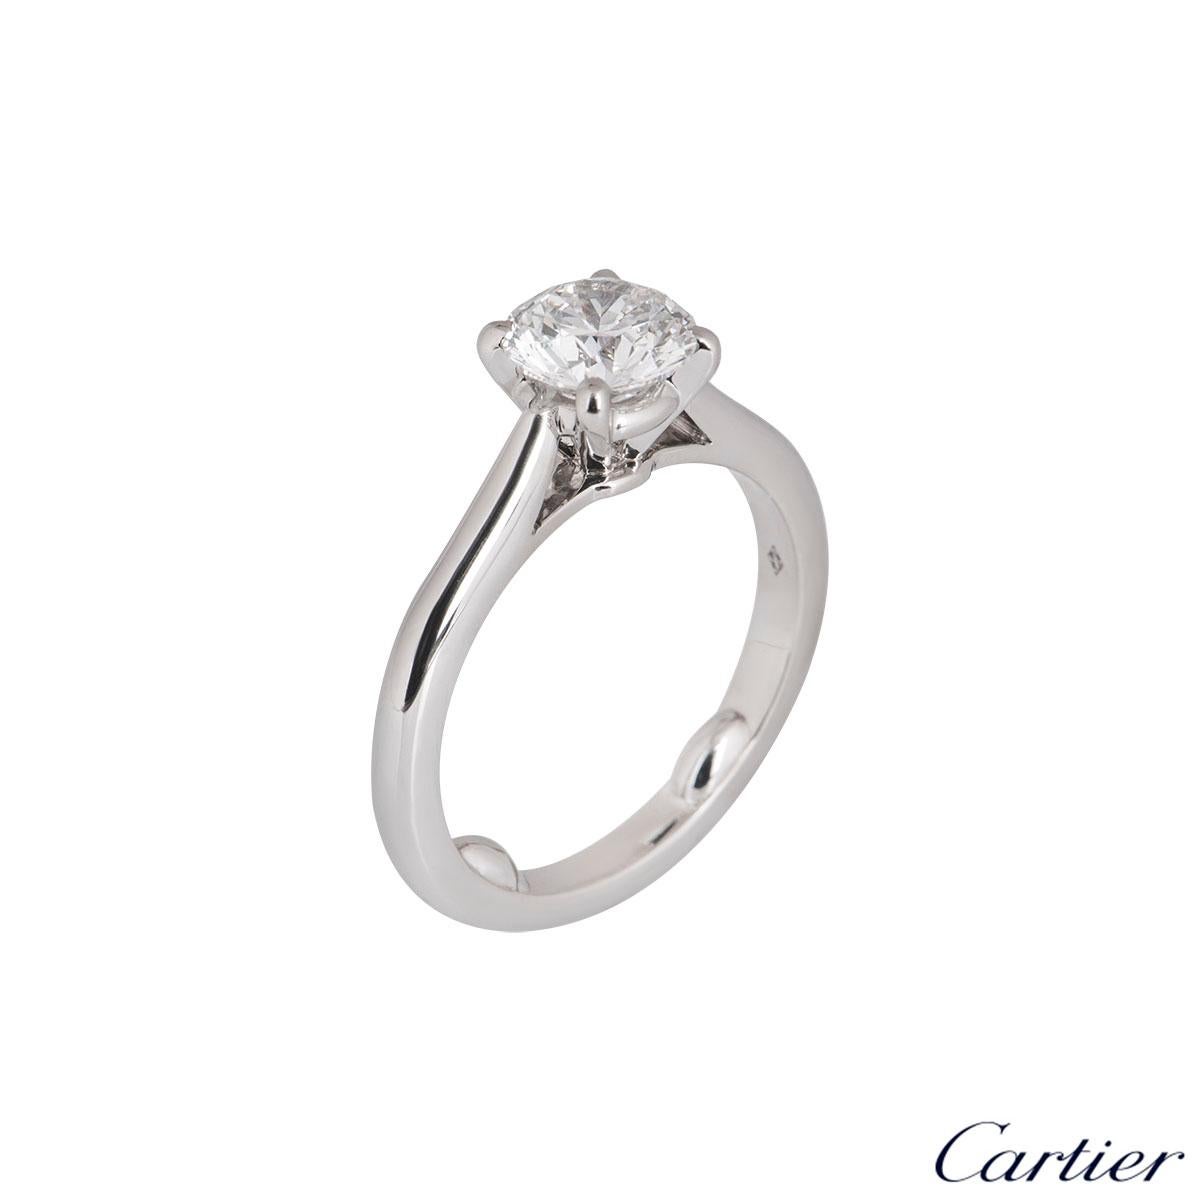 Round Cut Cartier Platinum Diamond 1895 Solitaire Ring 1.16ct G/VVS1 GIA Certified